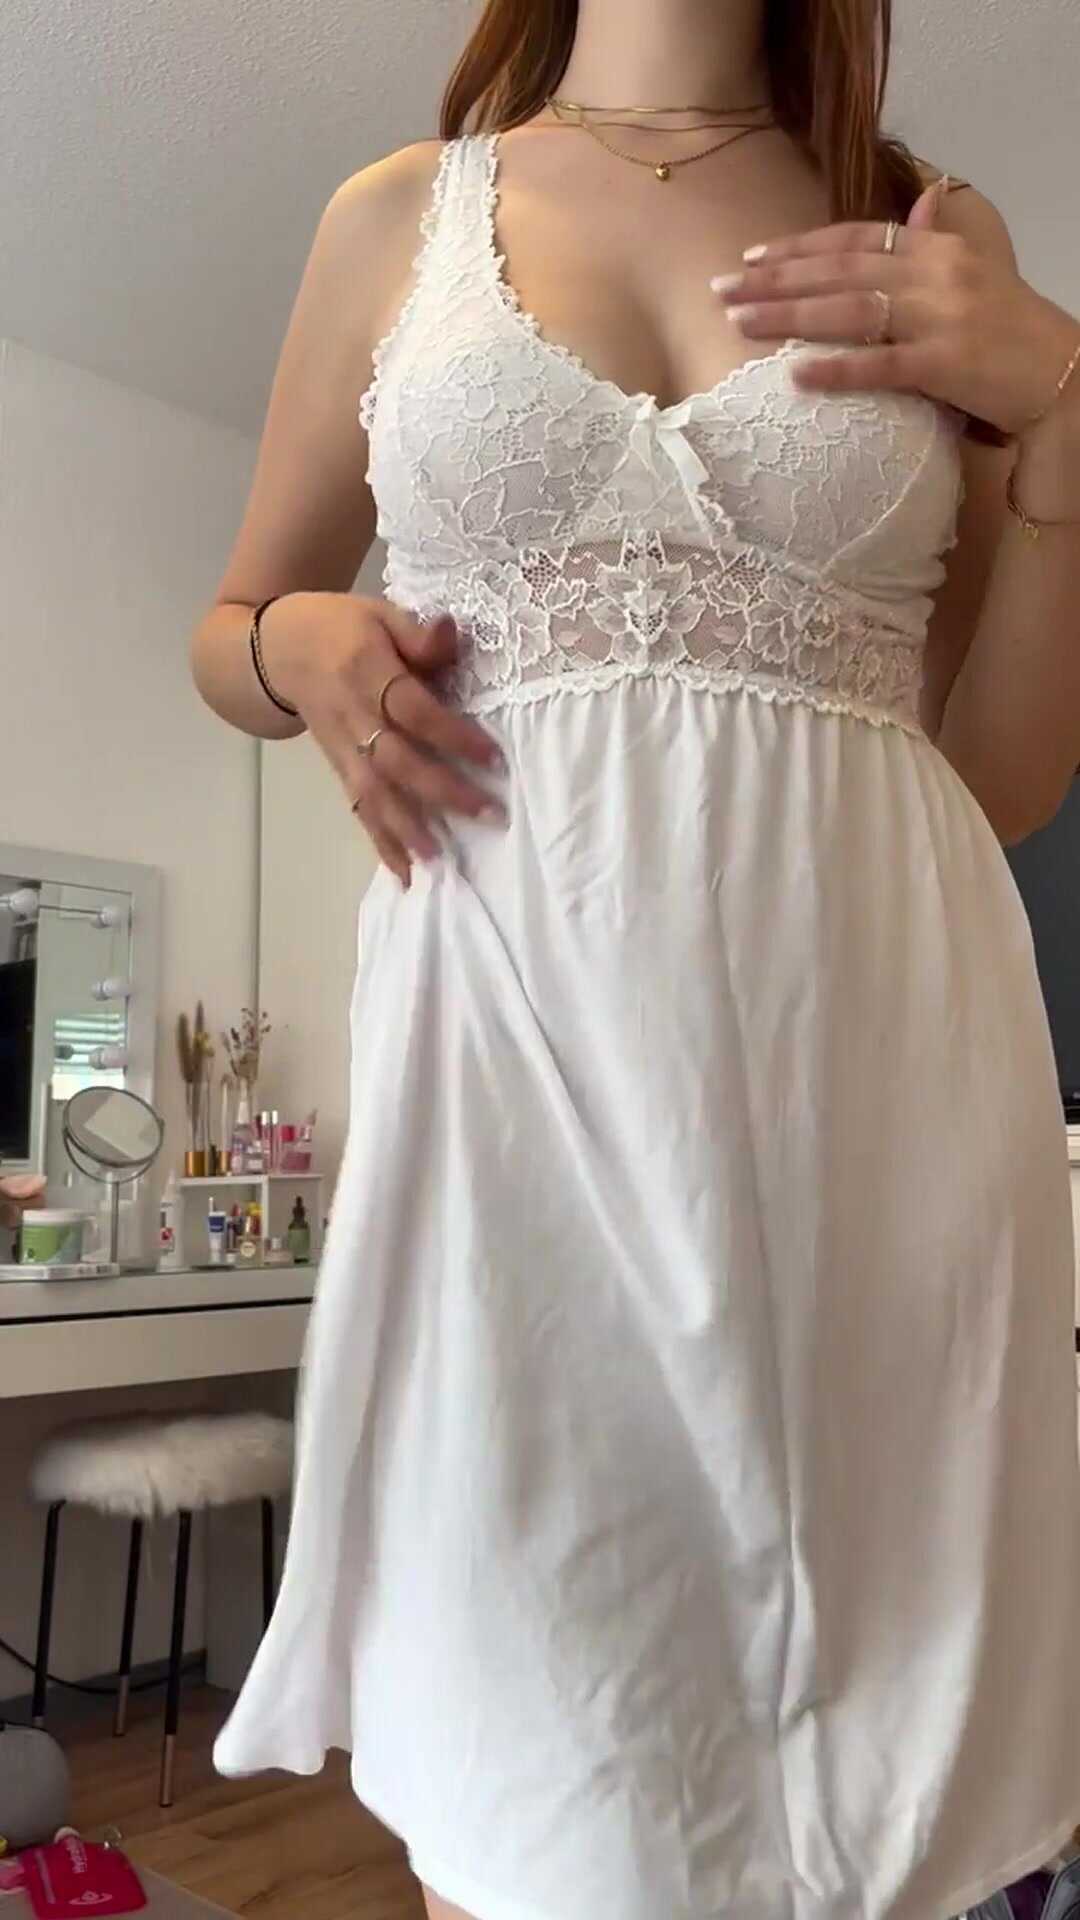 Cutie in sundress revealing nice boobs